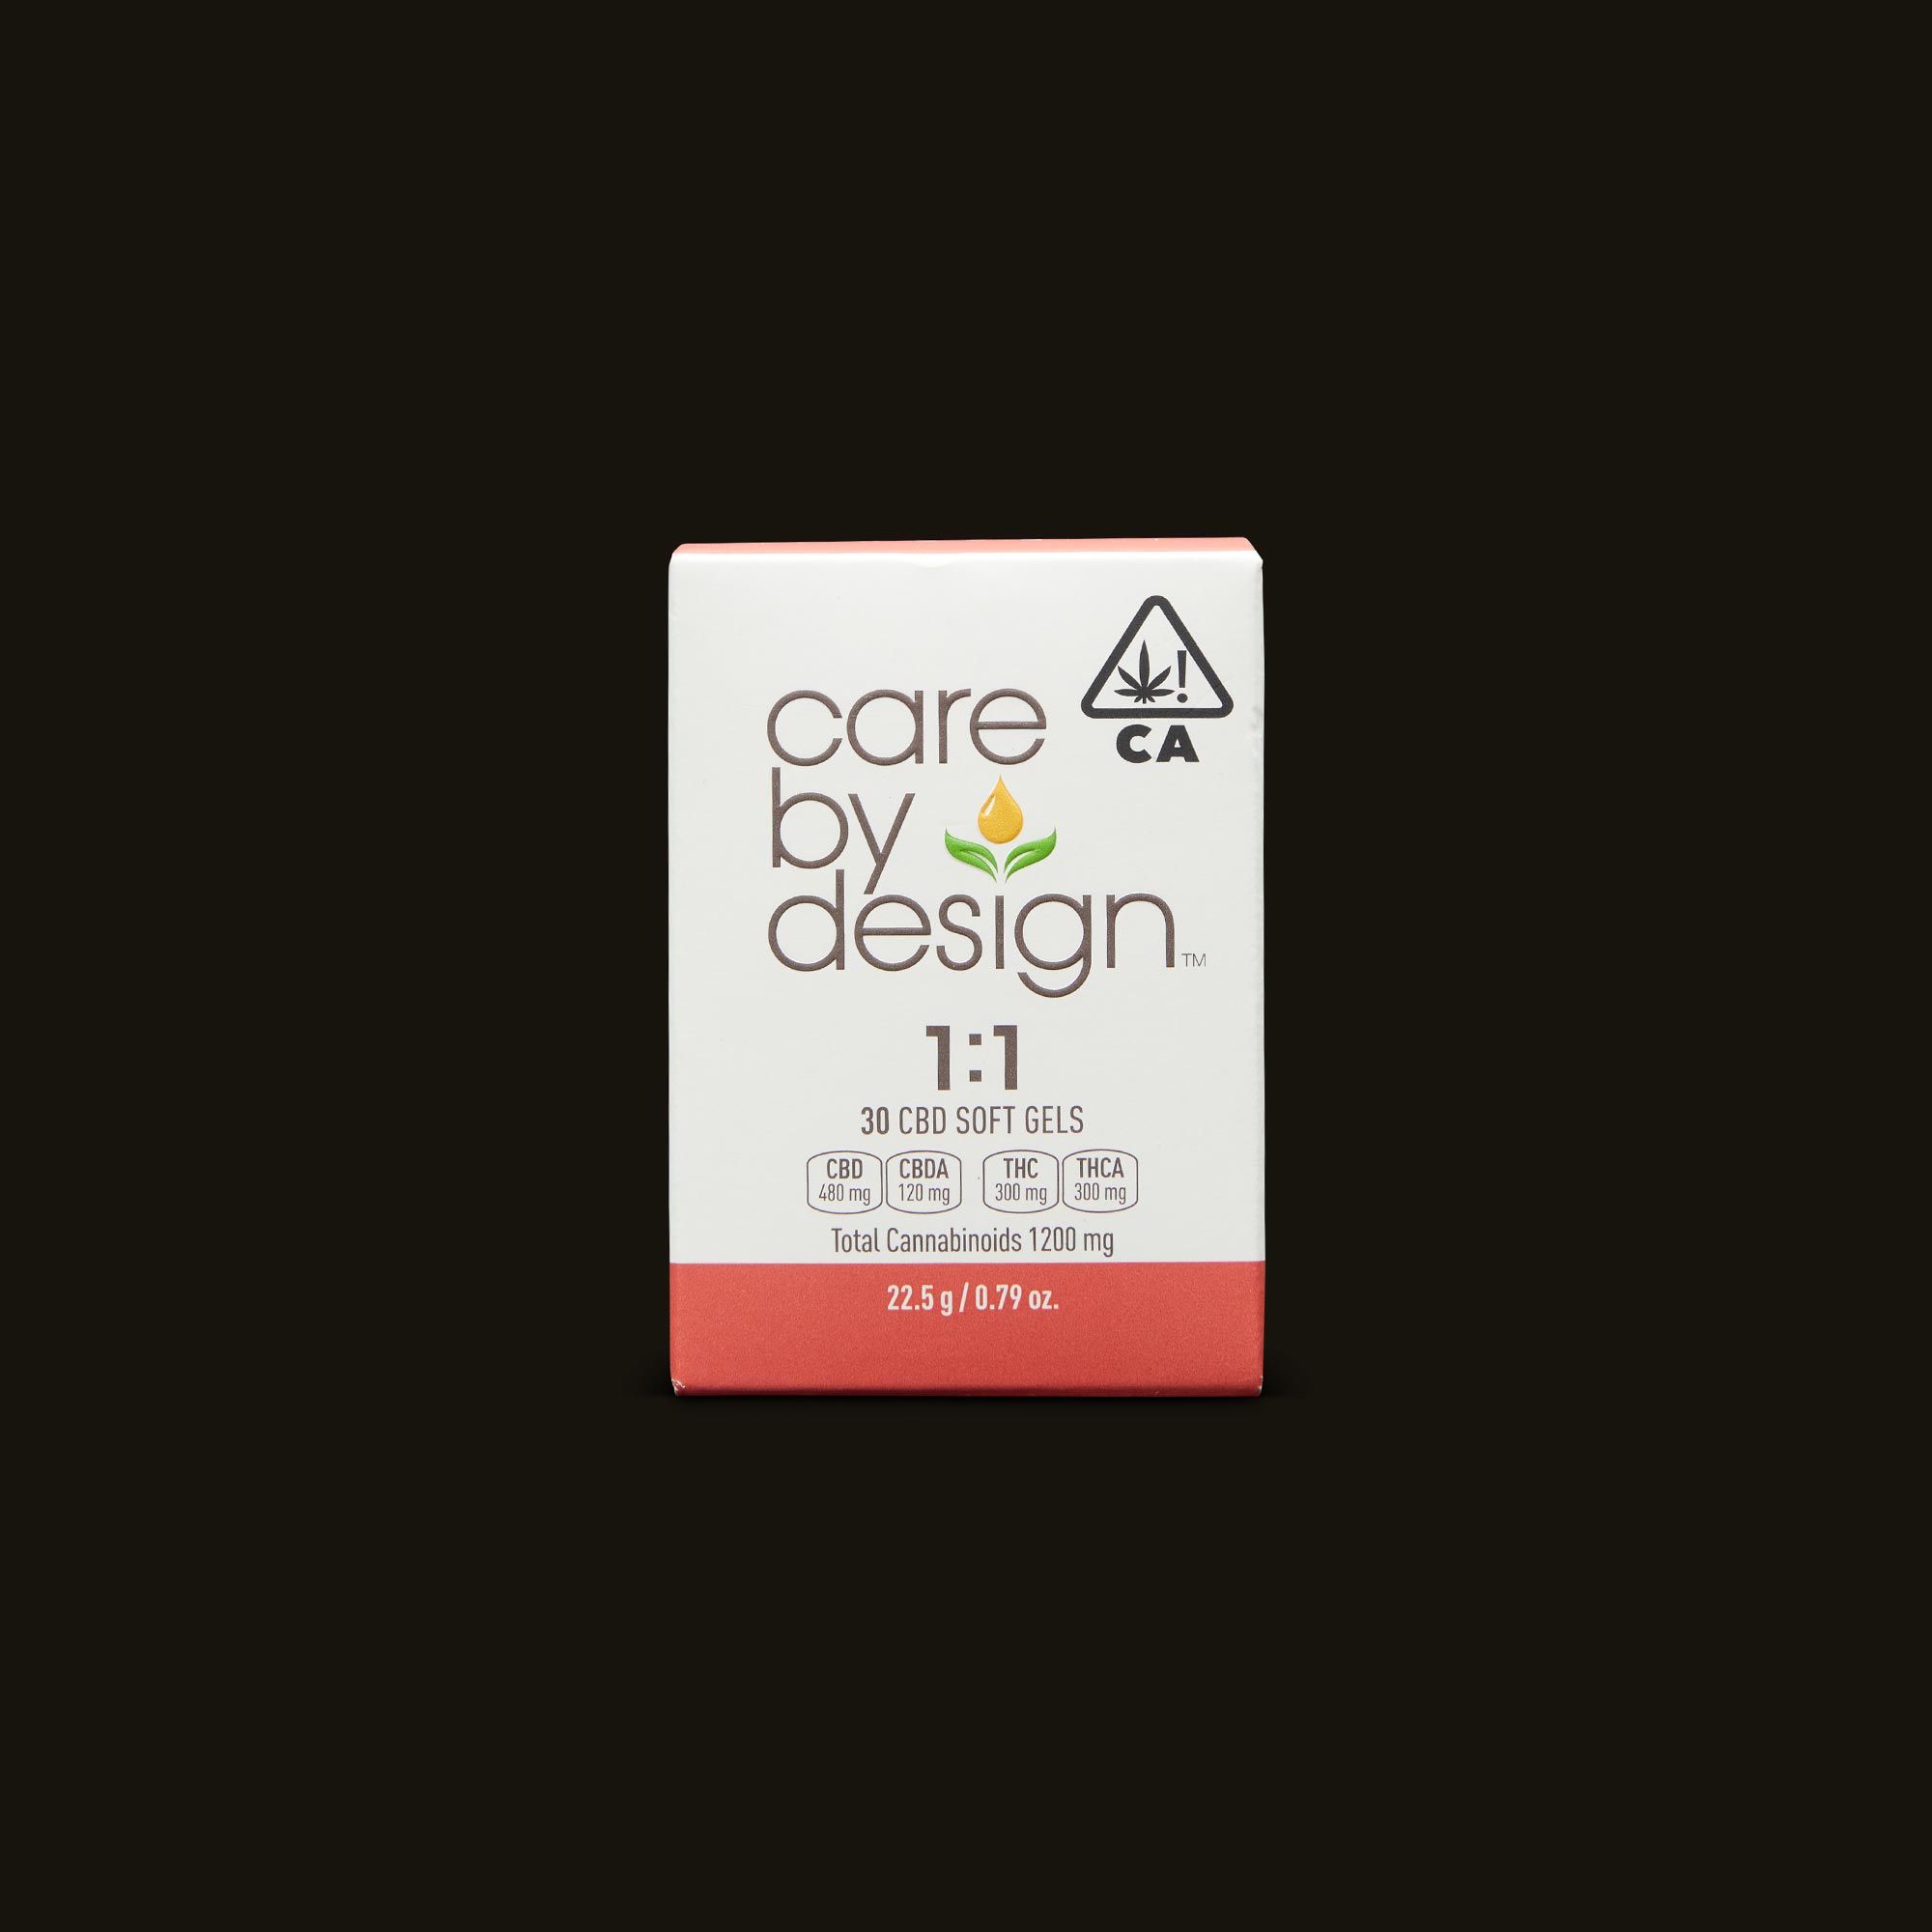 Care-by-Design-1-1-Soft-Gels-30-Pack0987-1582337